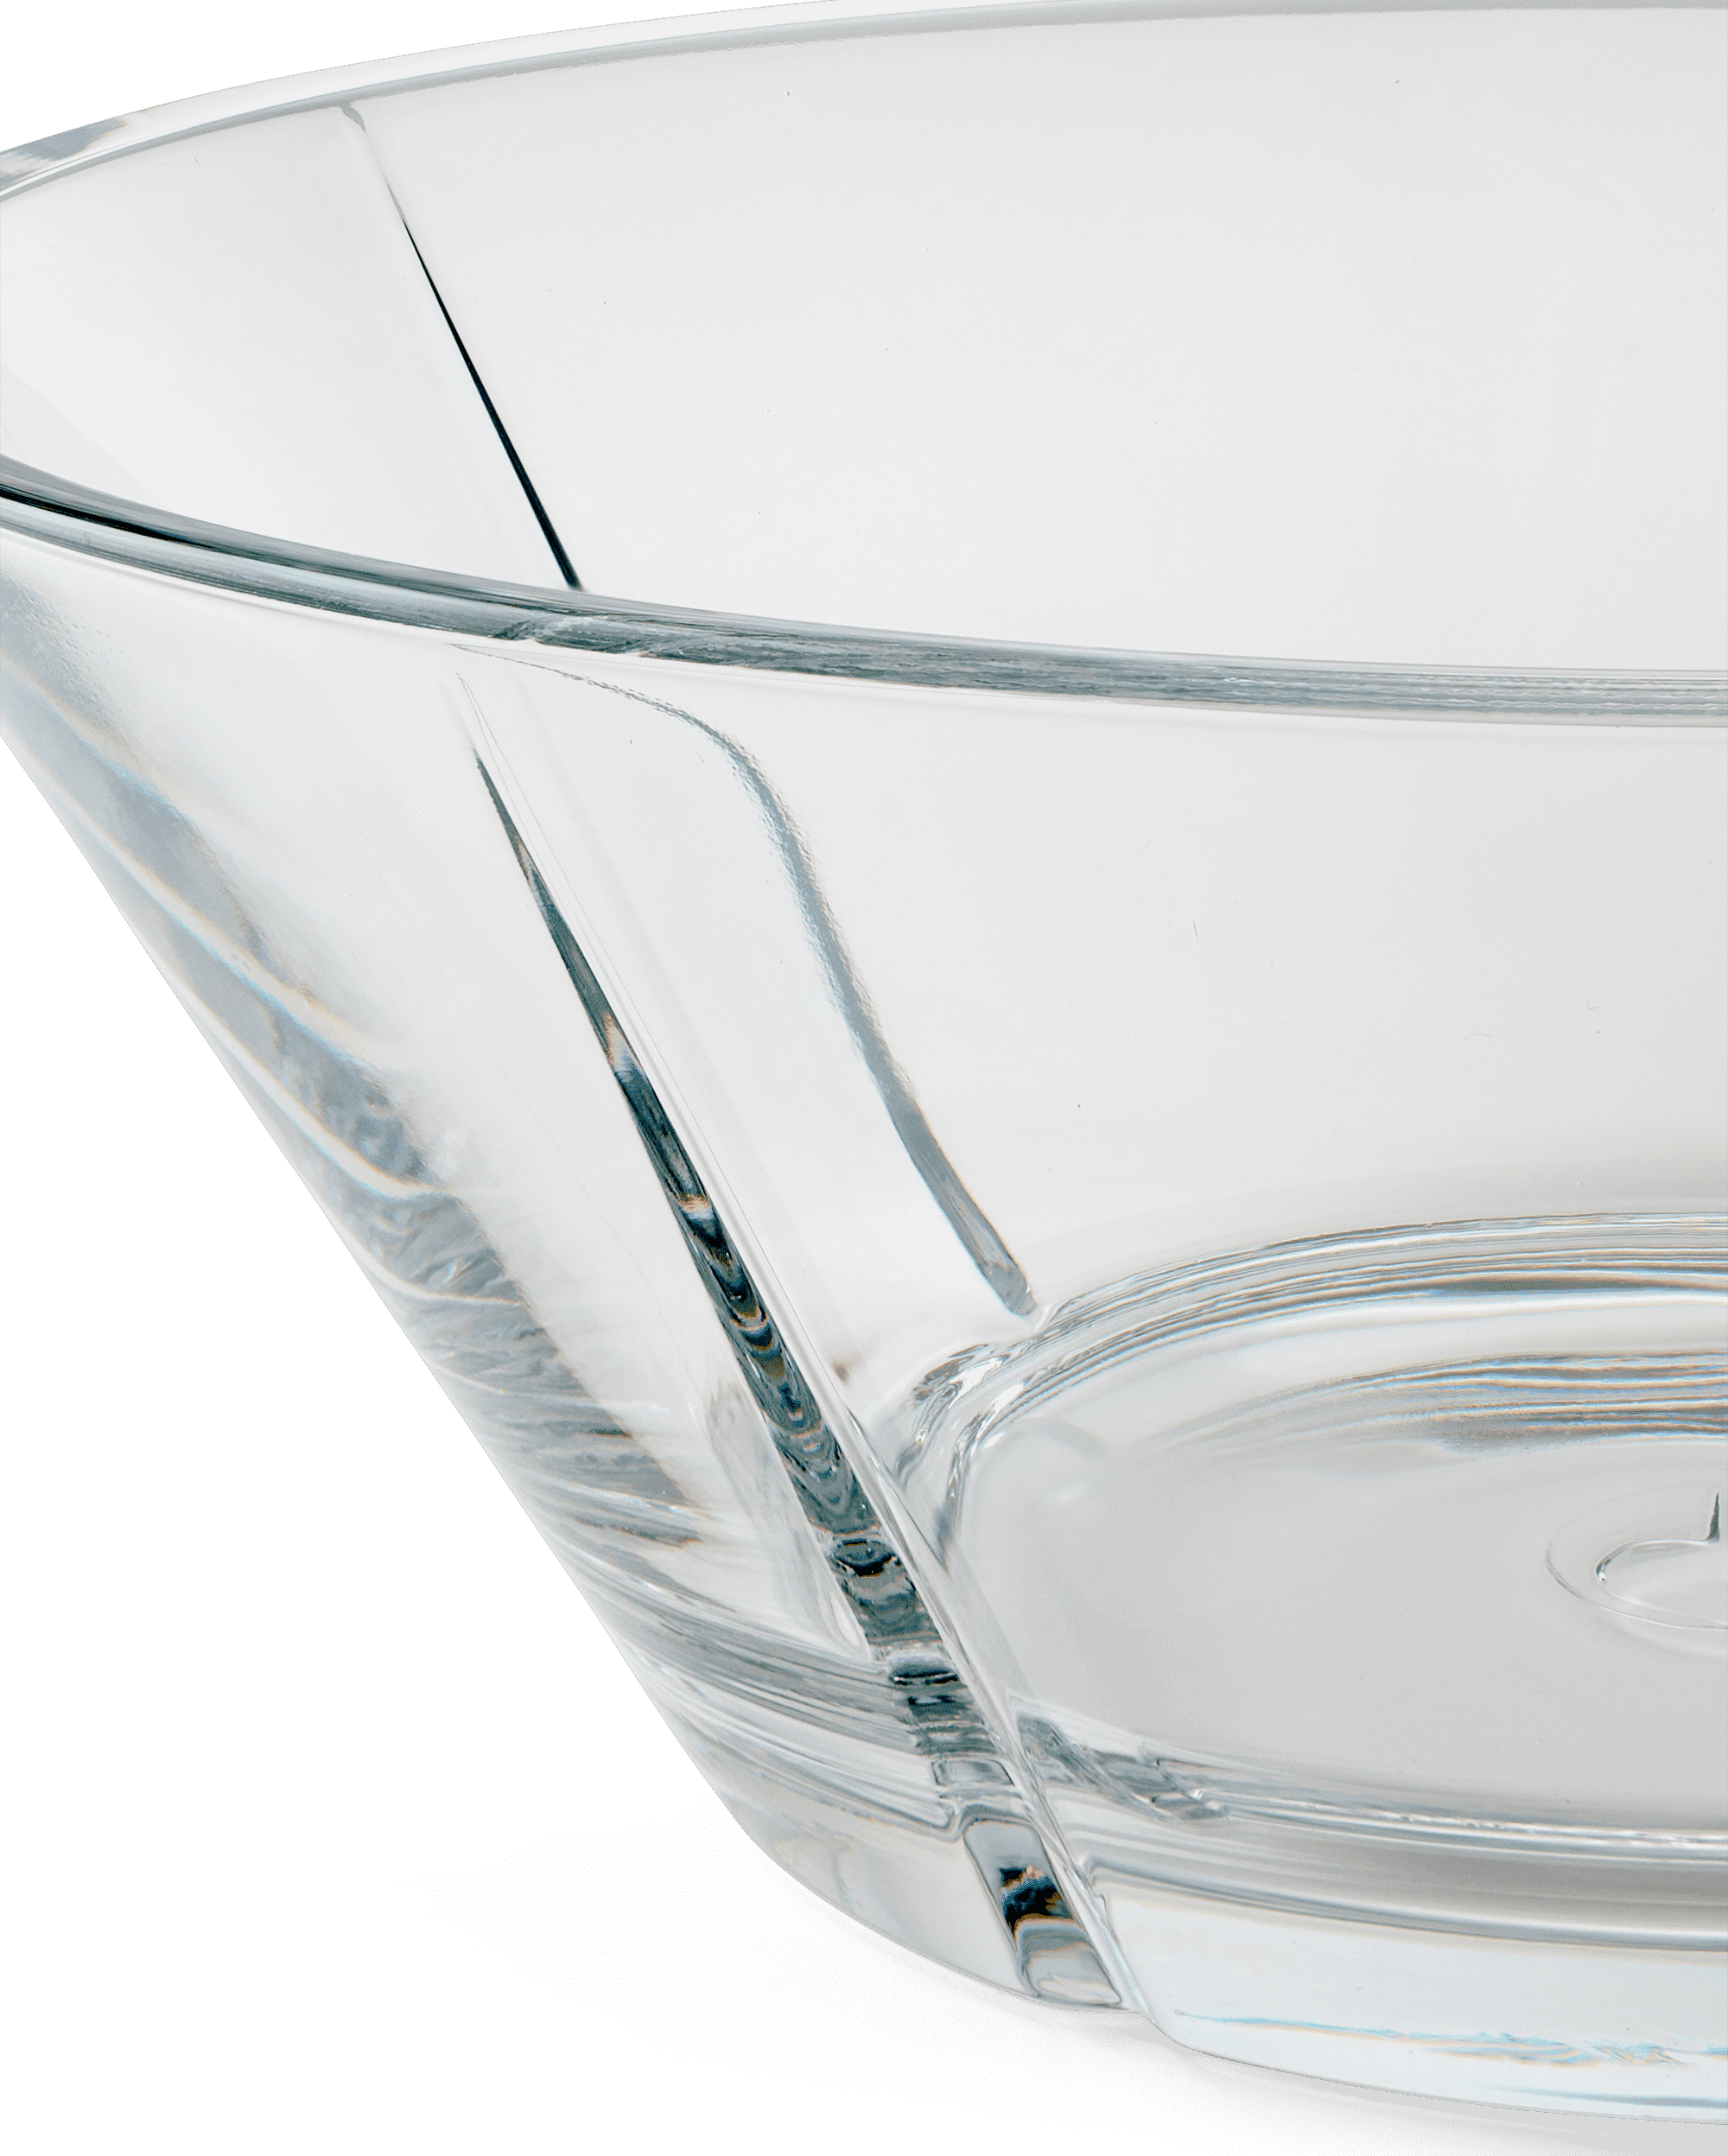 Design Erik Bagger. Glass Bowl Ø19.5 cm